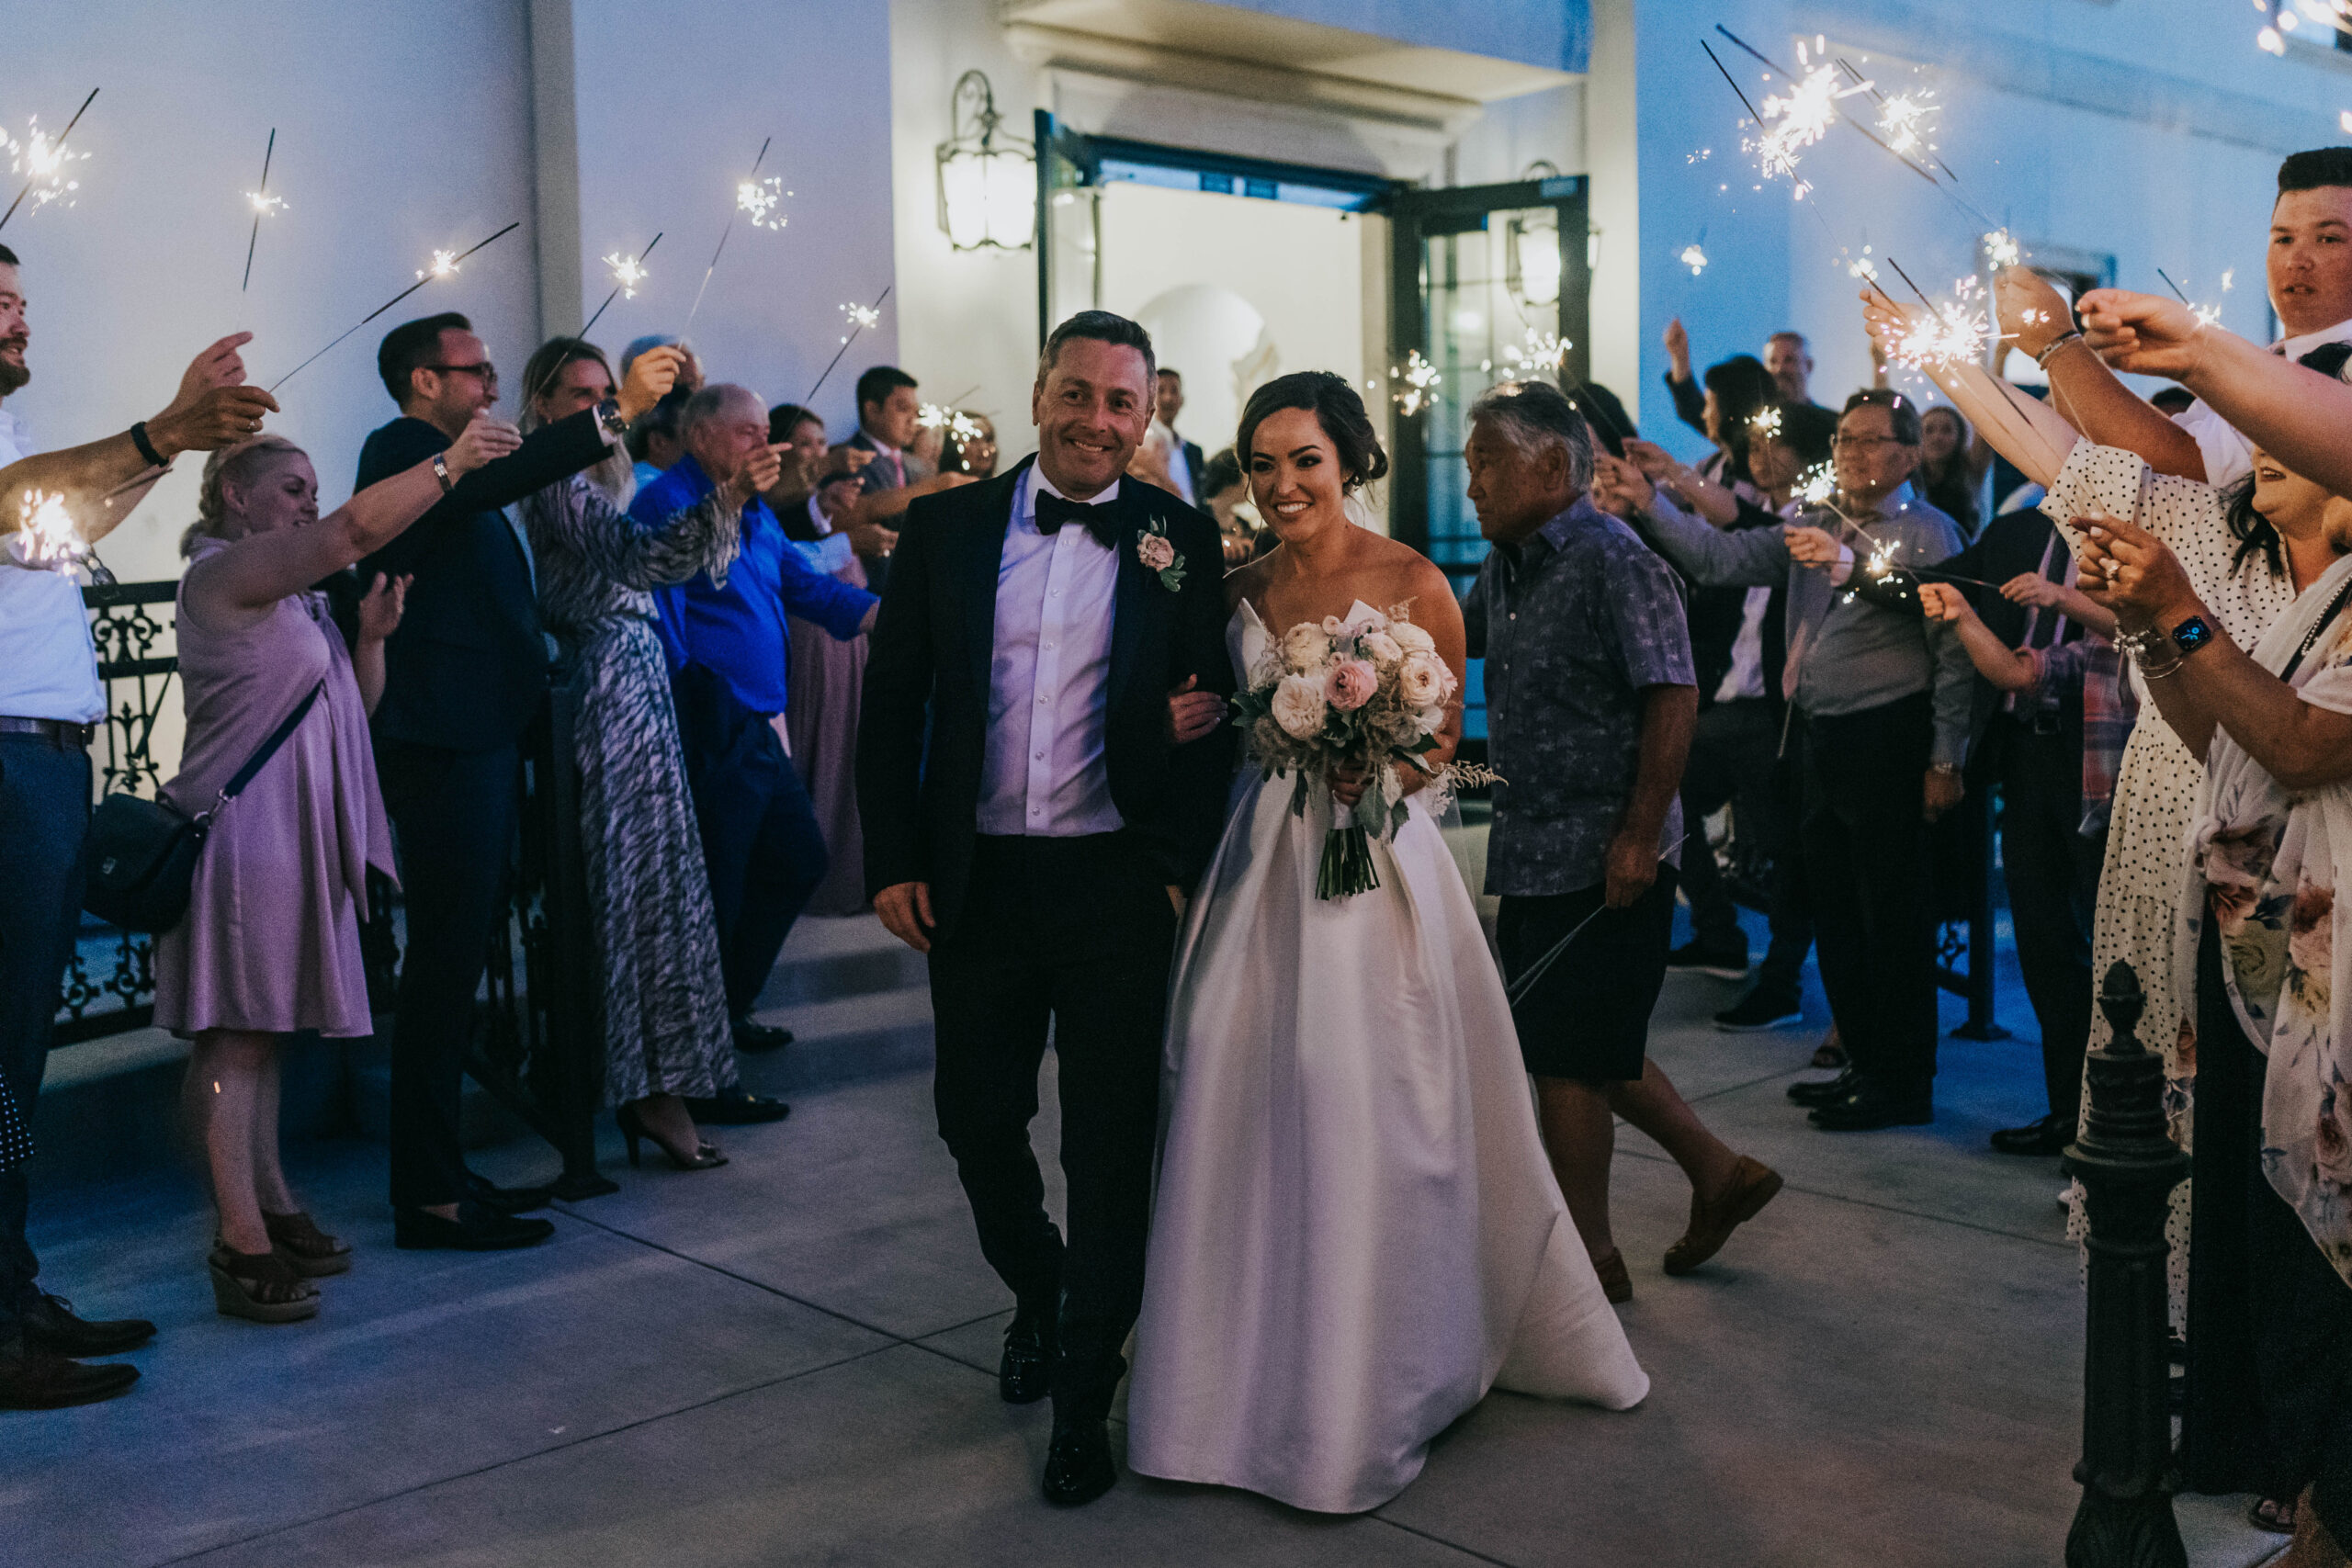 Boise wedding photographers capture couple leaving wedding together during sparkler exit